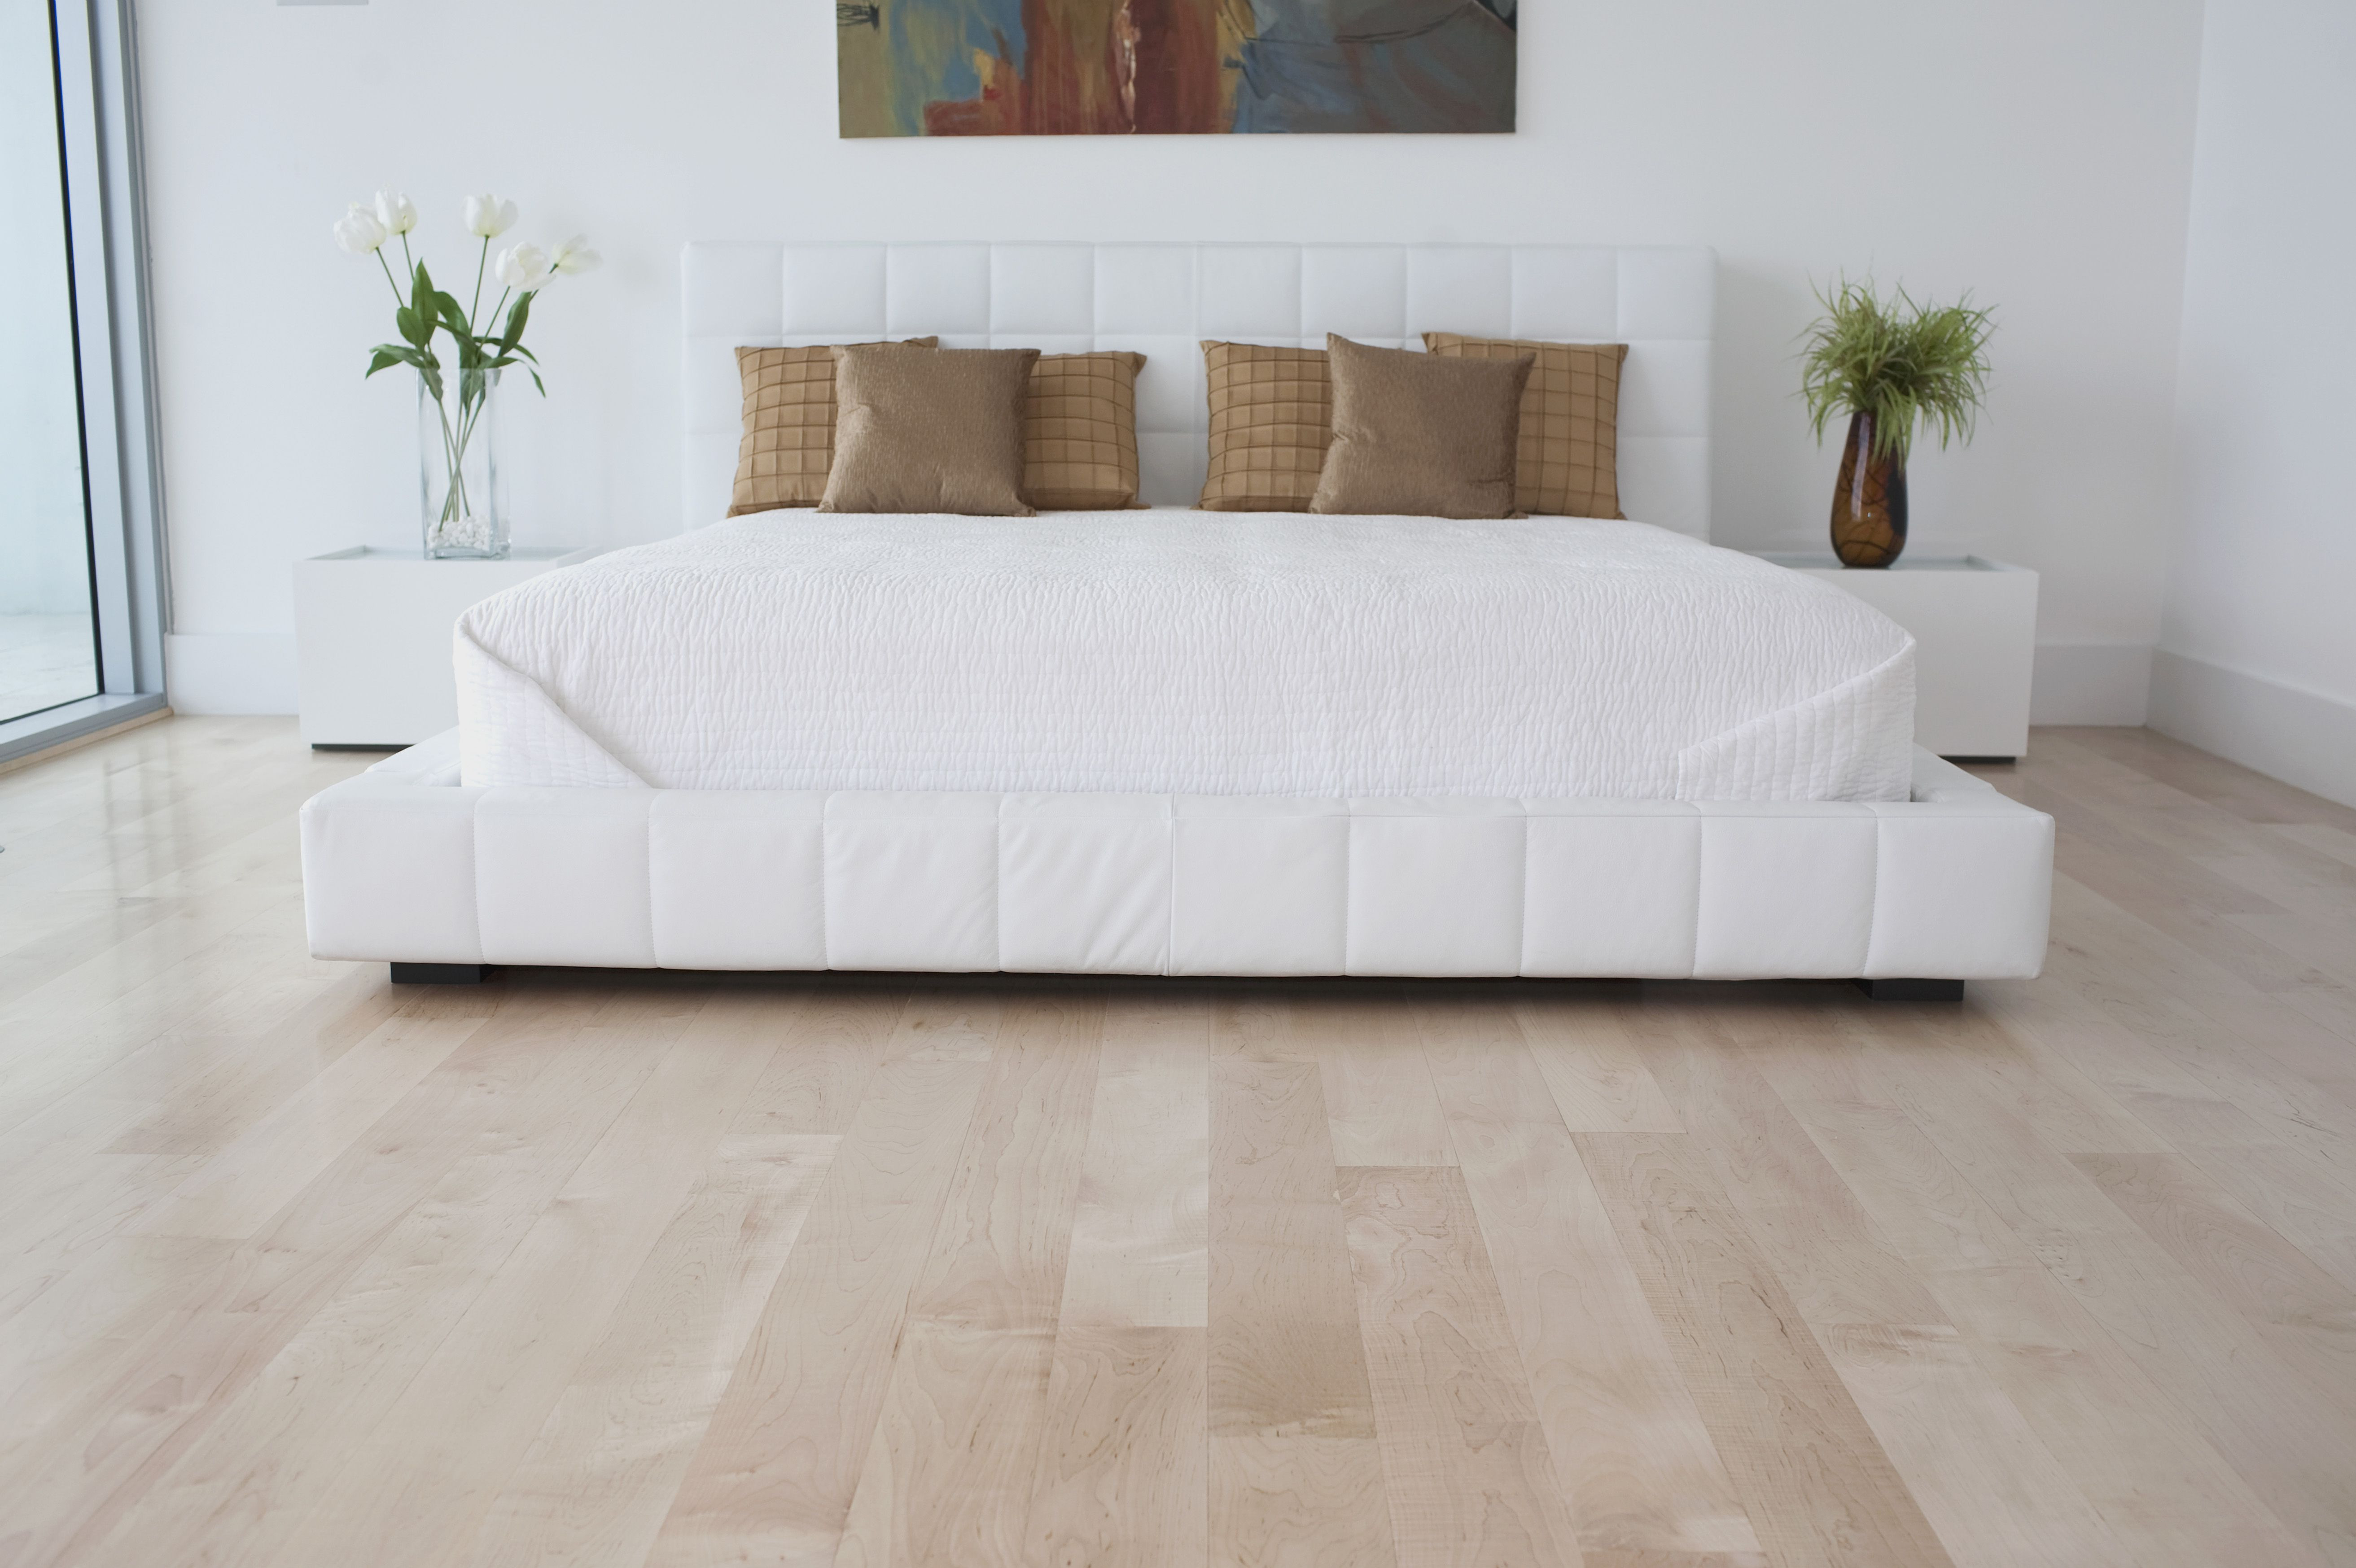 d lux hardwood floors of 5 best bedroom flooring materials in interiors of a bedroom 126171674 57be063d3df78cc16e3cc6cf